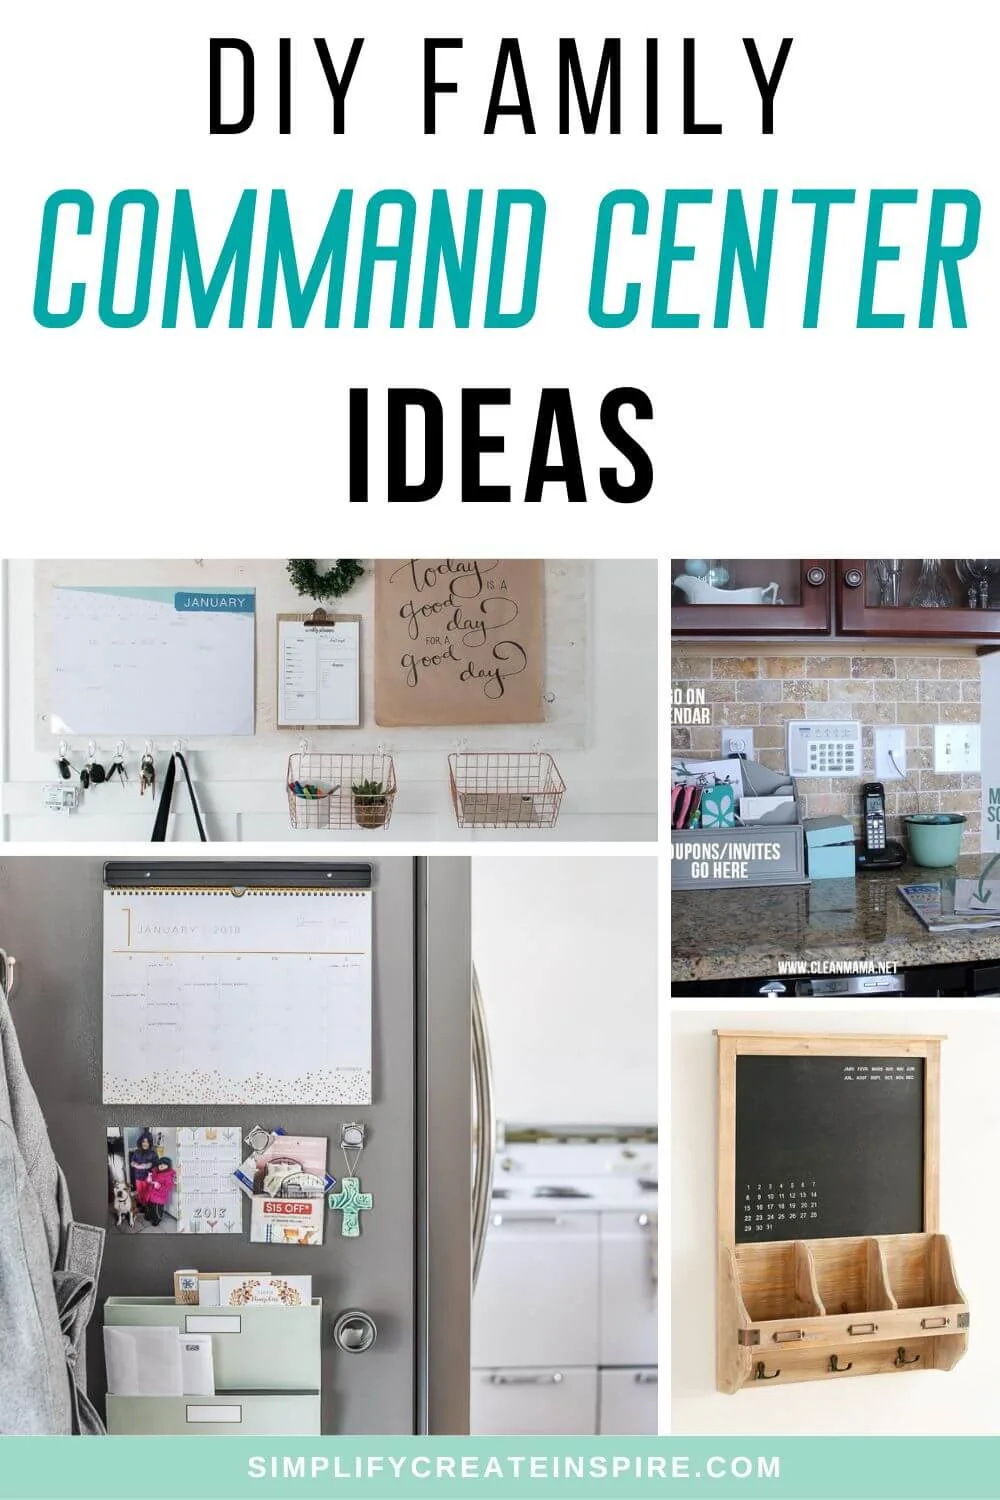 Pinterest image - text reads diy family command center ideas